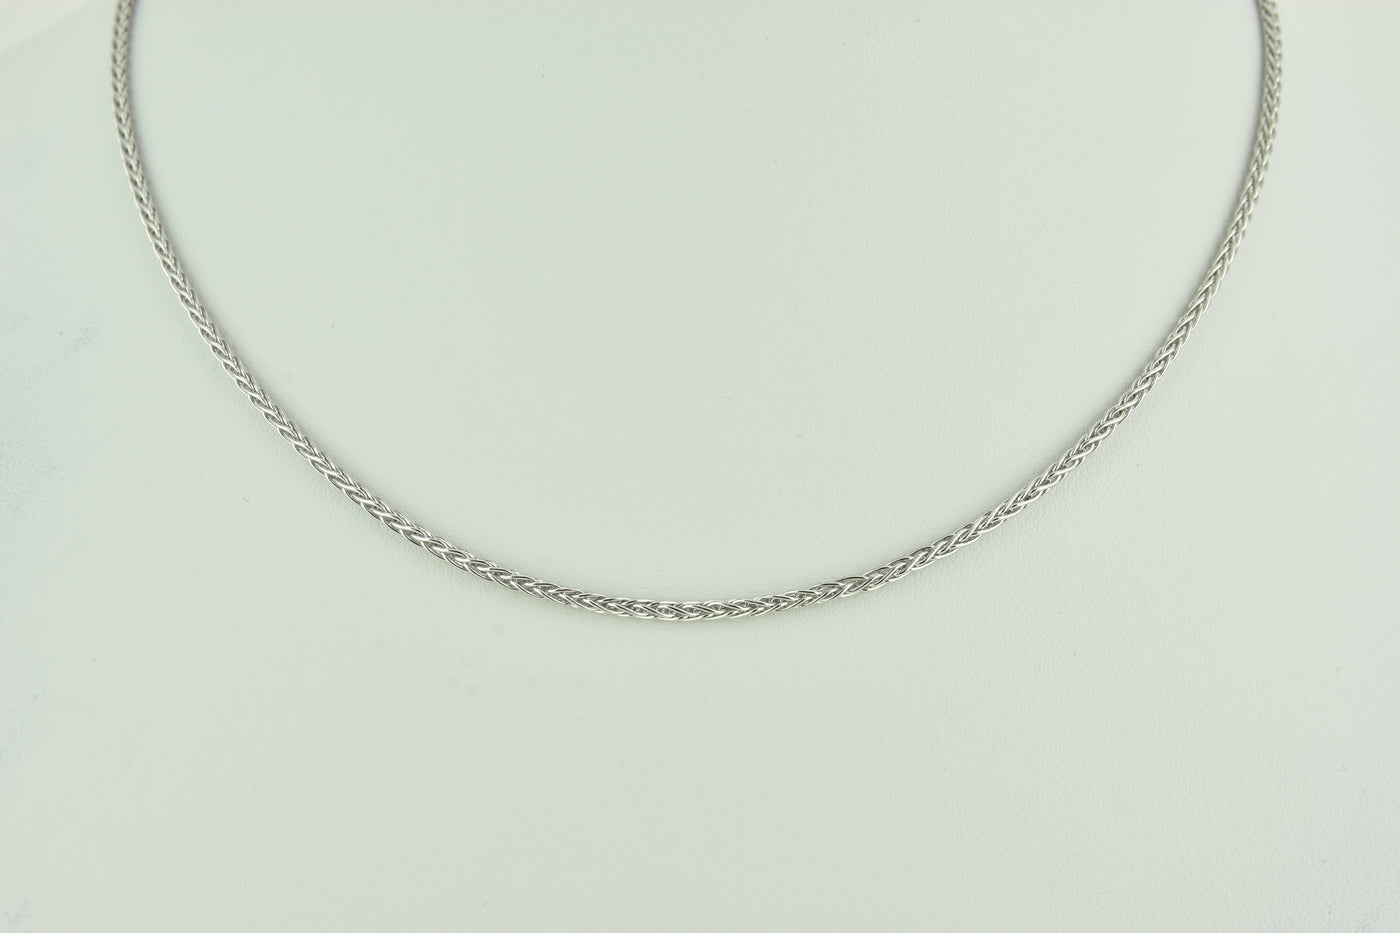 Italian Braid Sterling Silver Chain with White Rhodium Plate